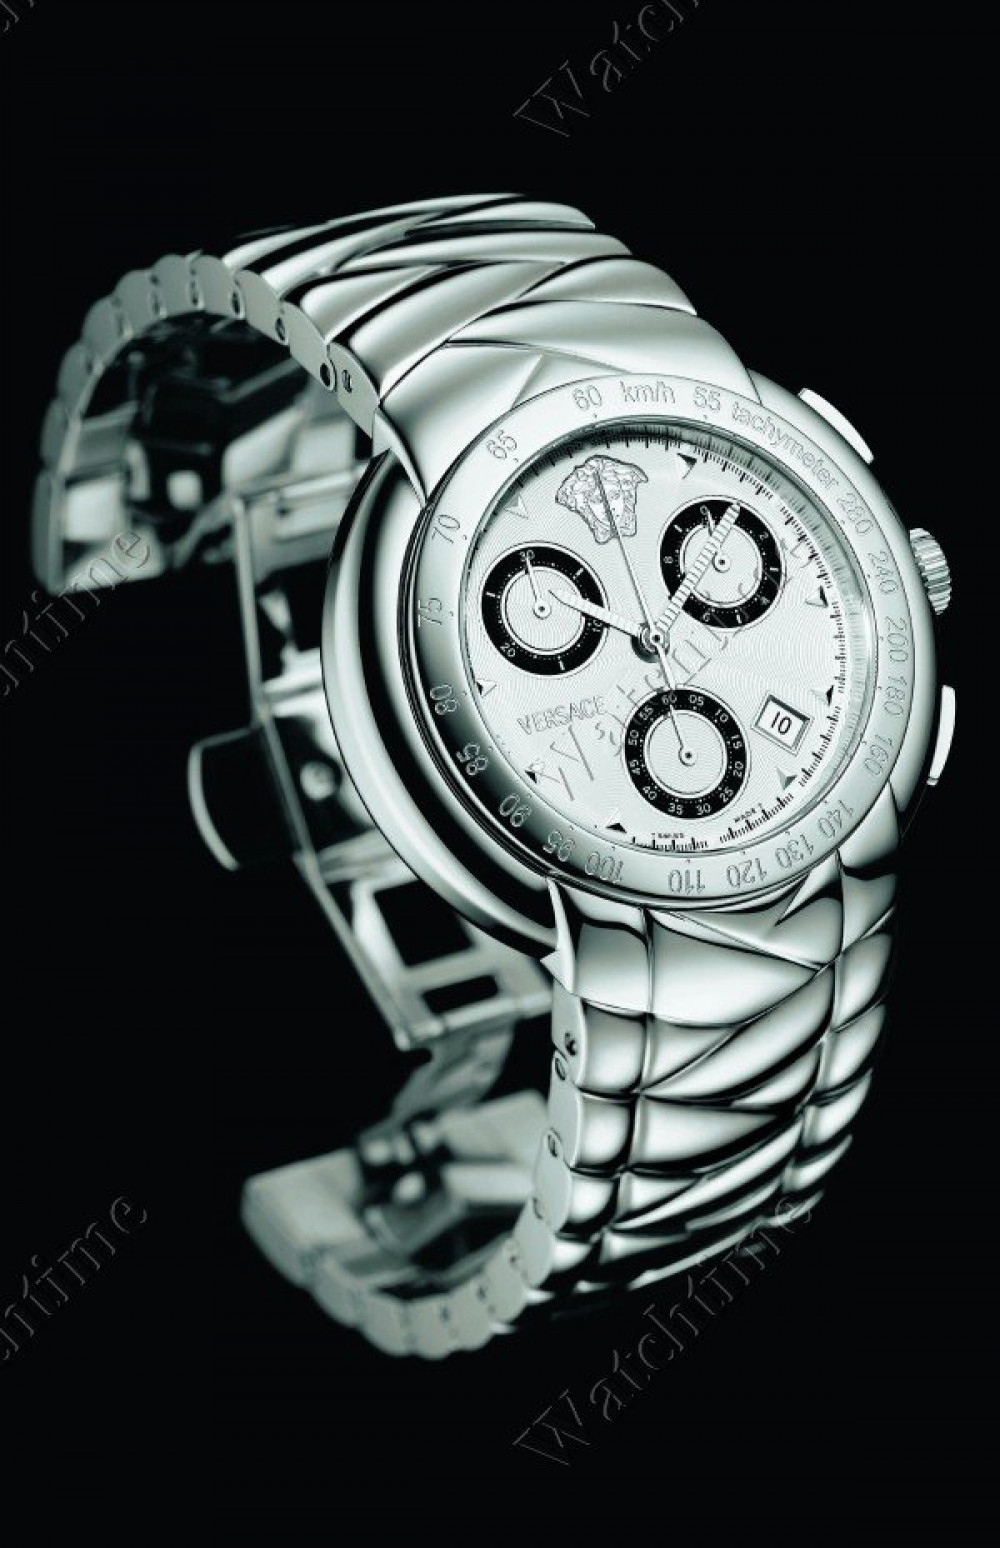 Zegarek firmy Versace, model Atelier Chrono